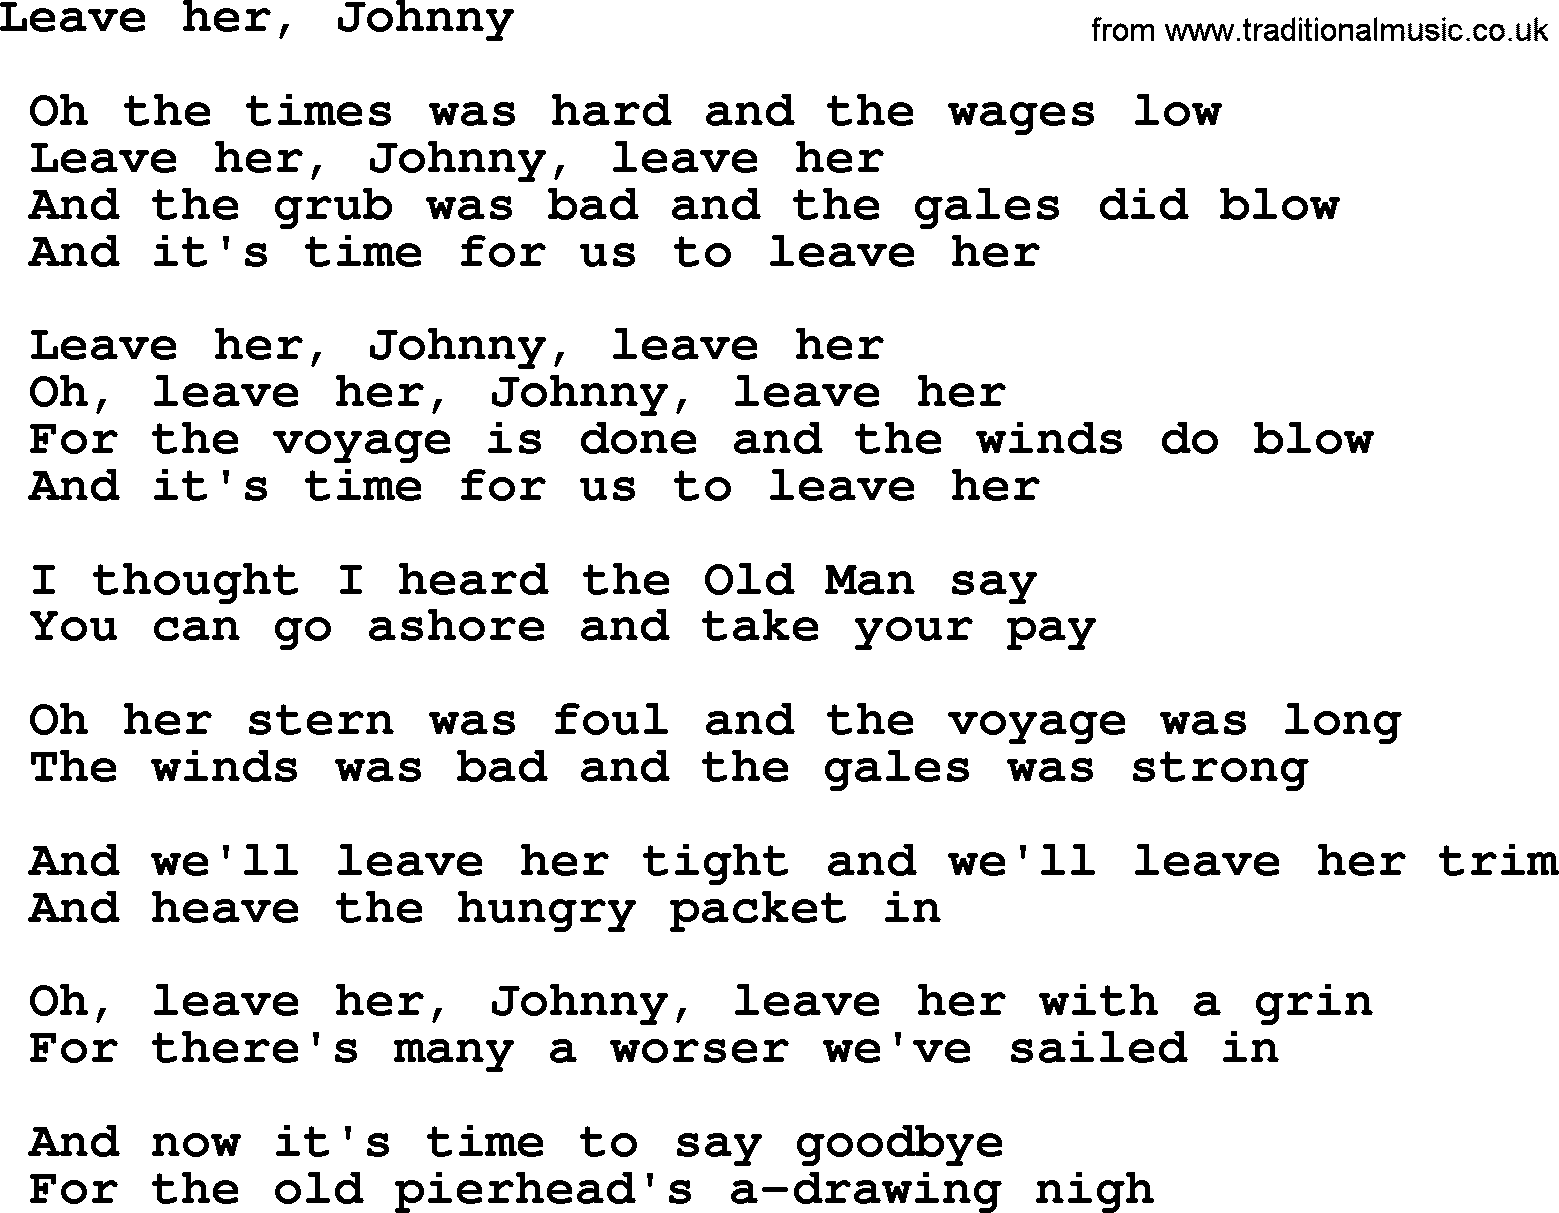 Sea Song or Shantie: Leave Her Johnny, lyrics